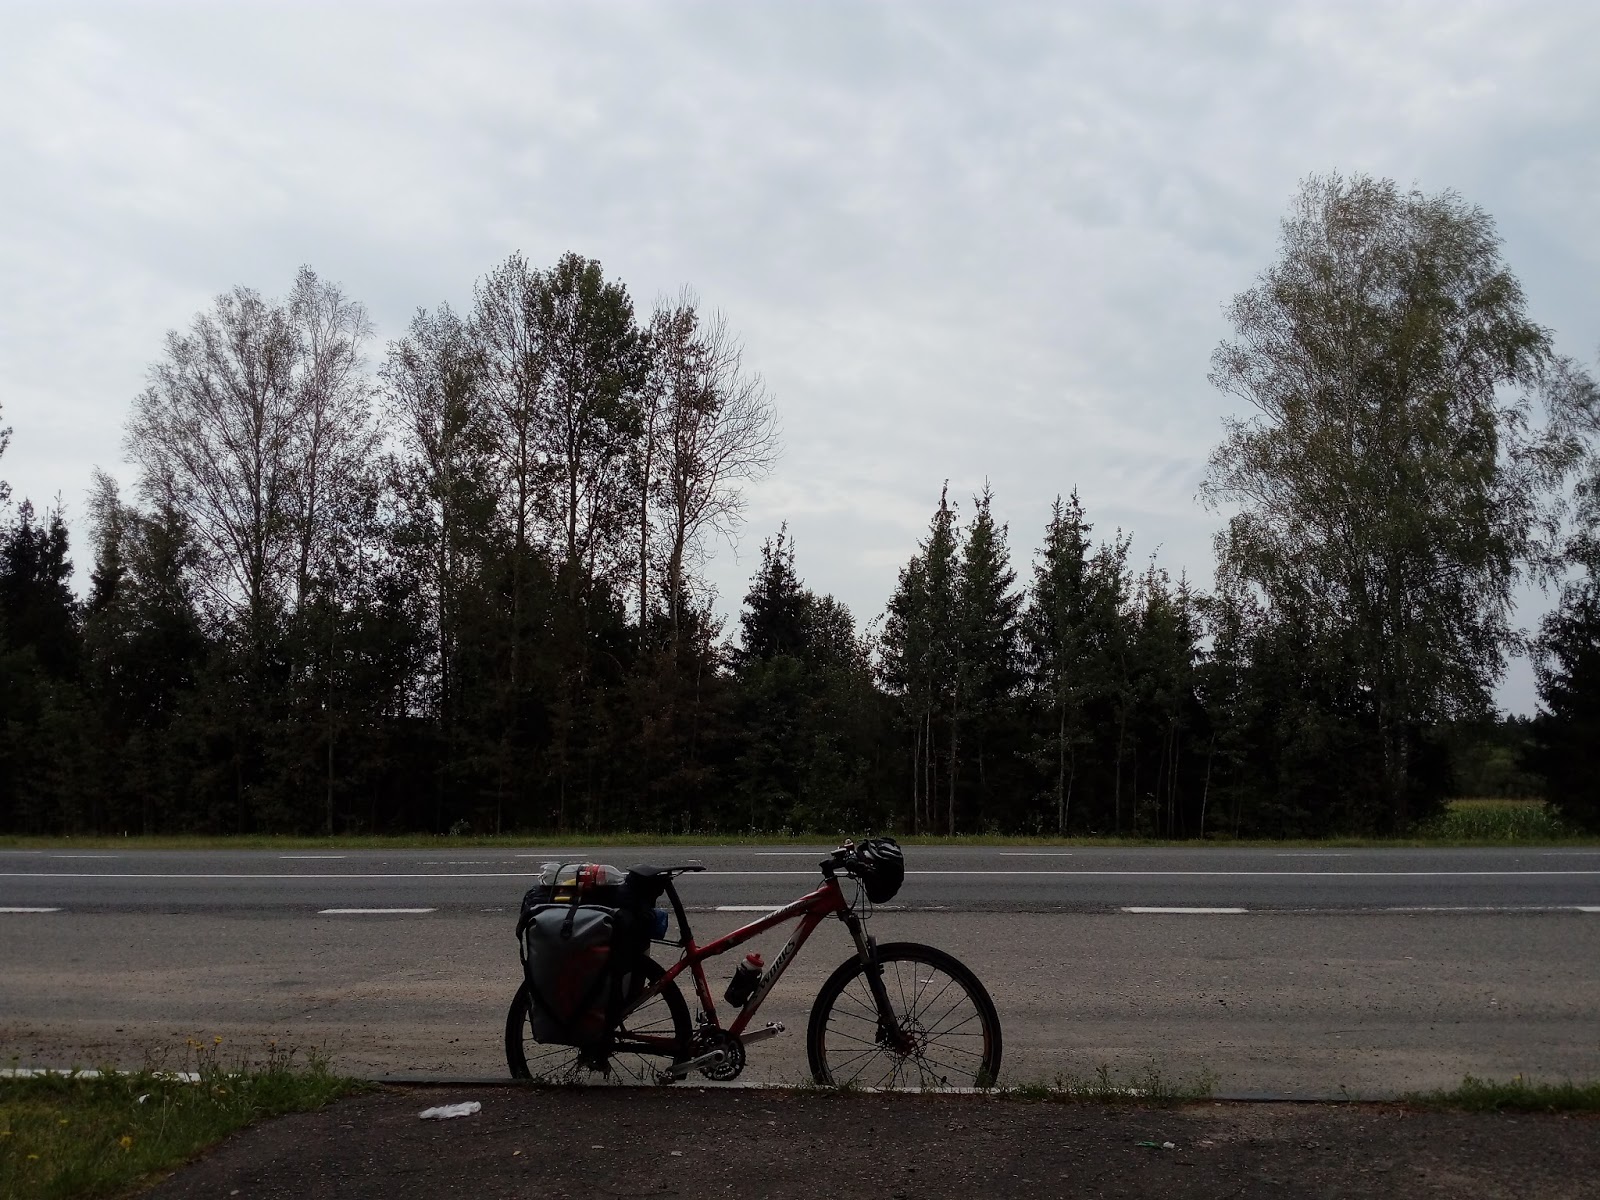 bicicletta autostrada oggi